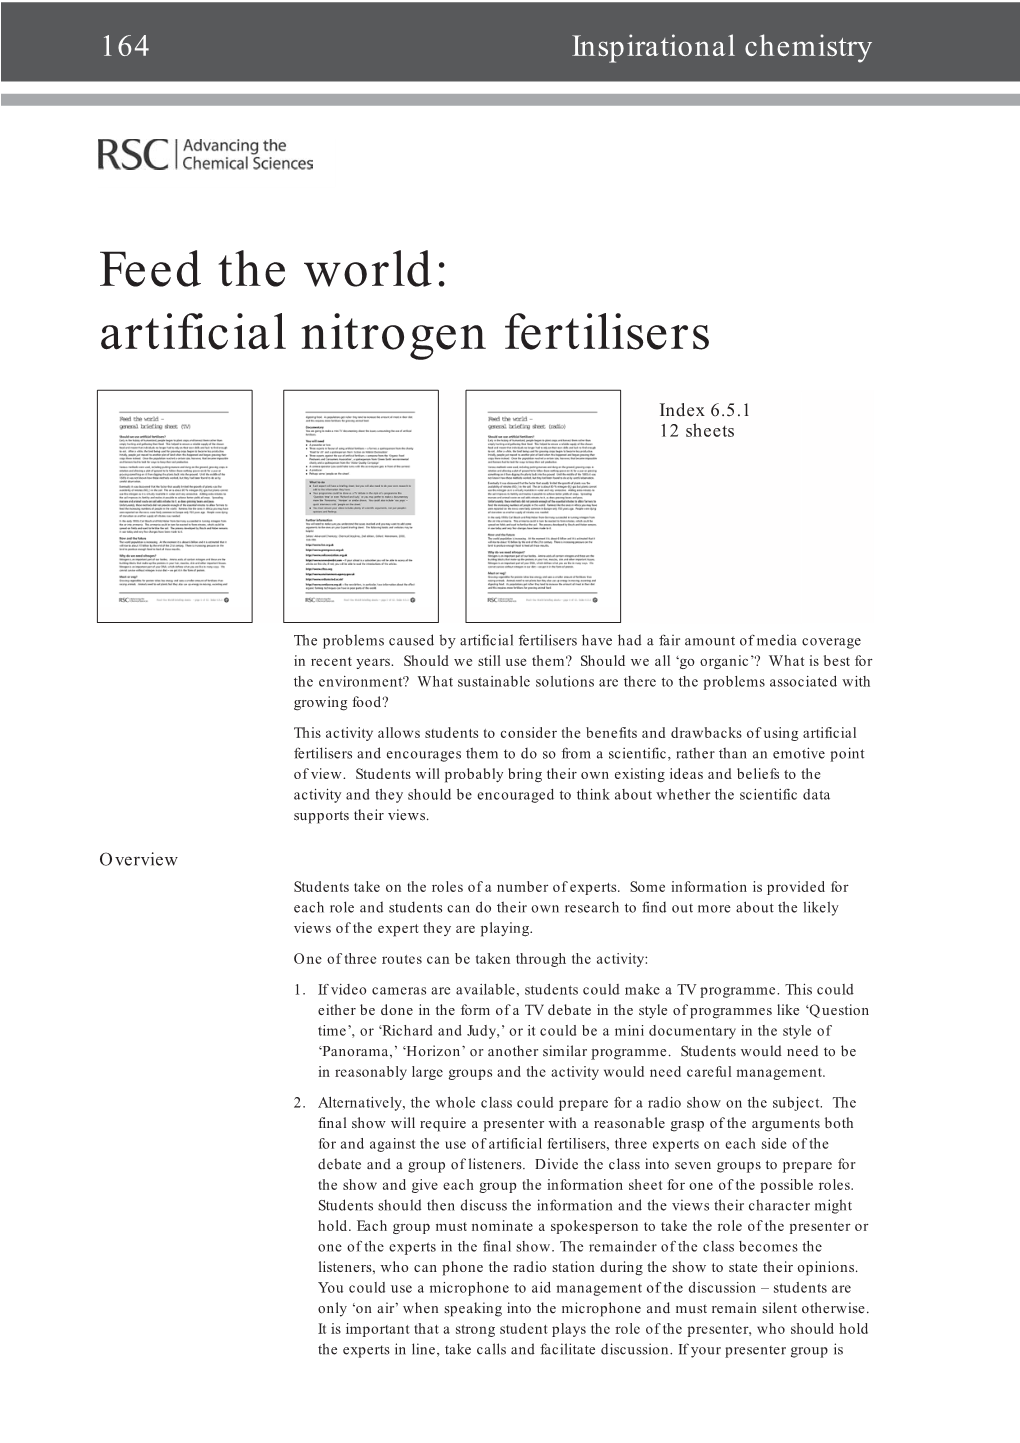 Feed the World: Artificial Nitrogen Fertilisers